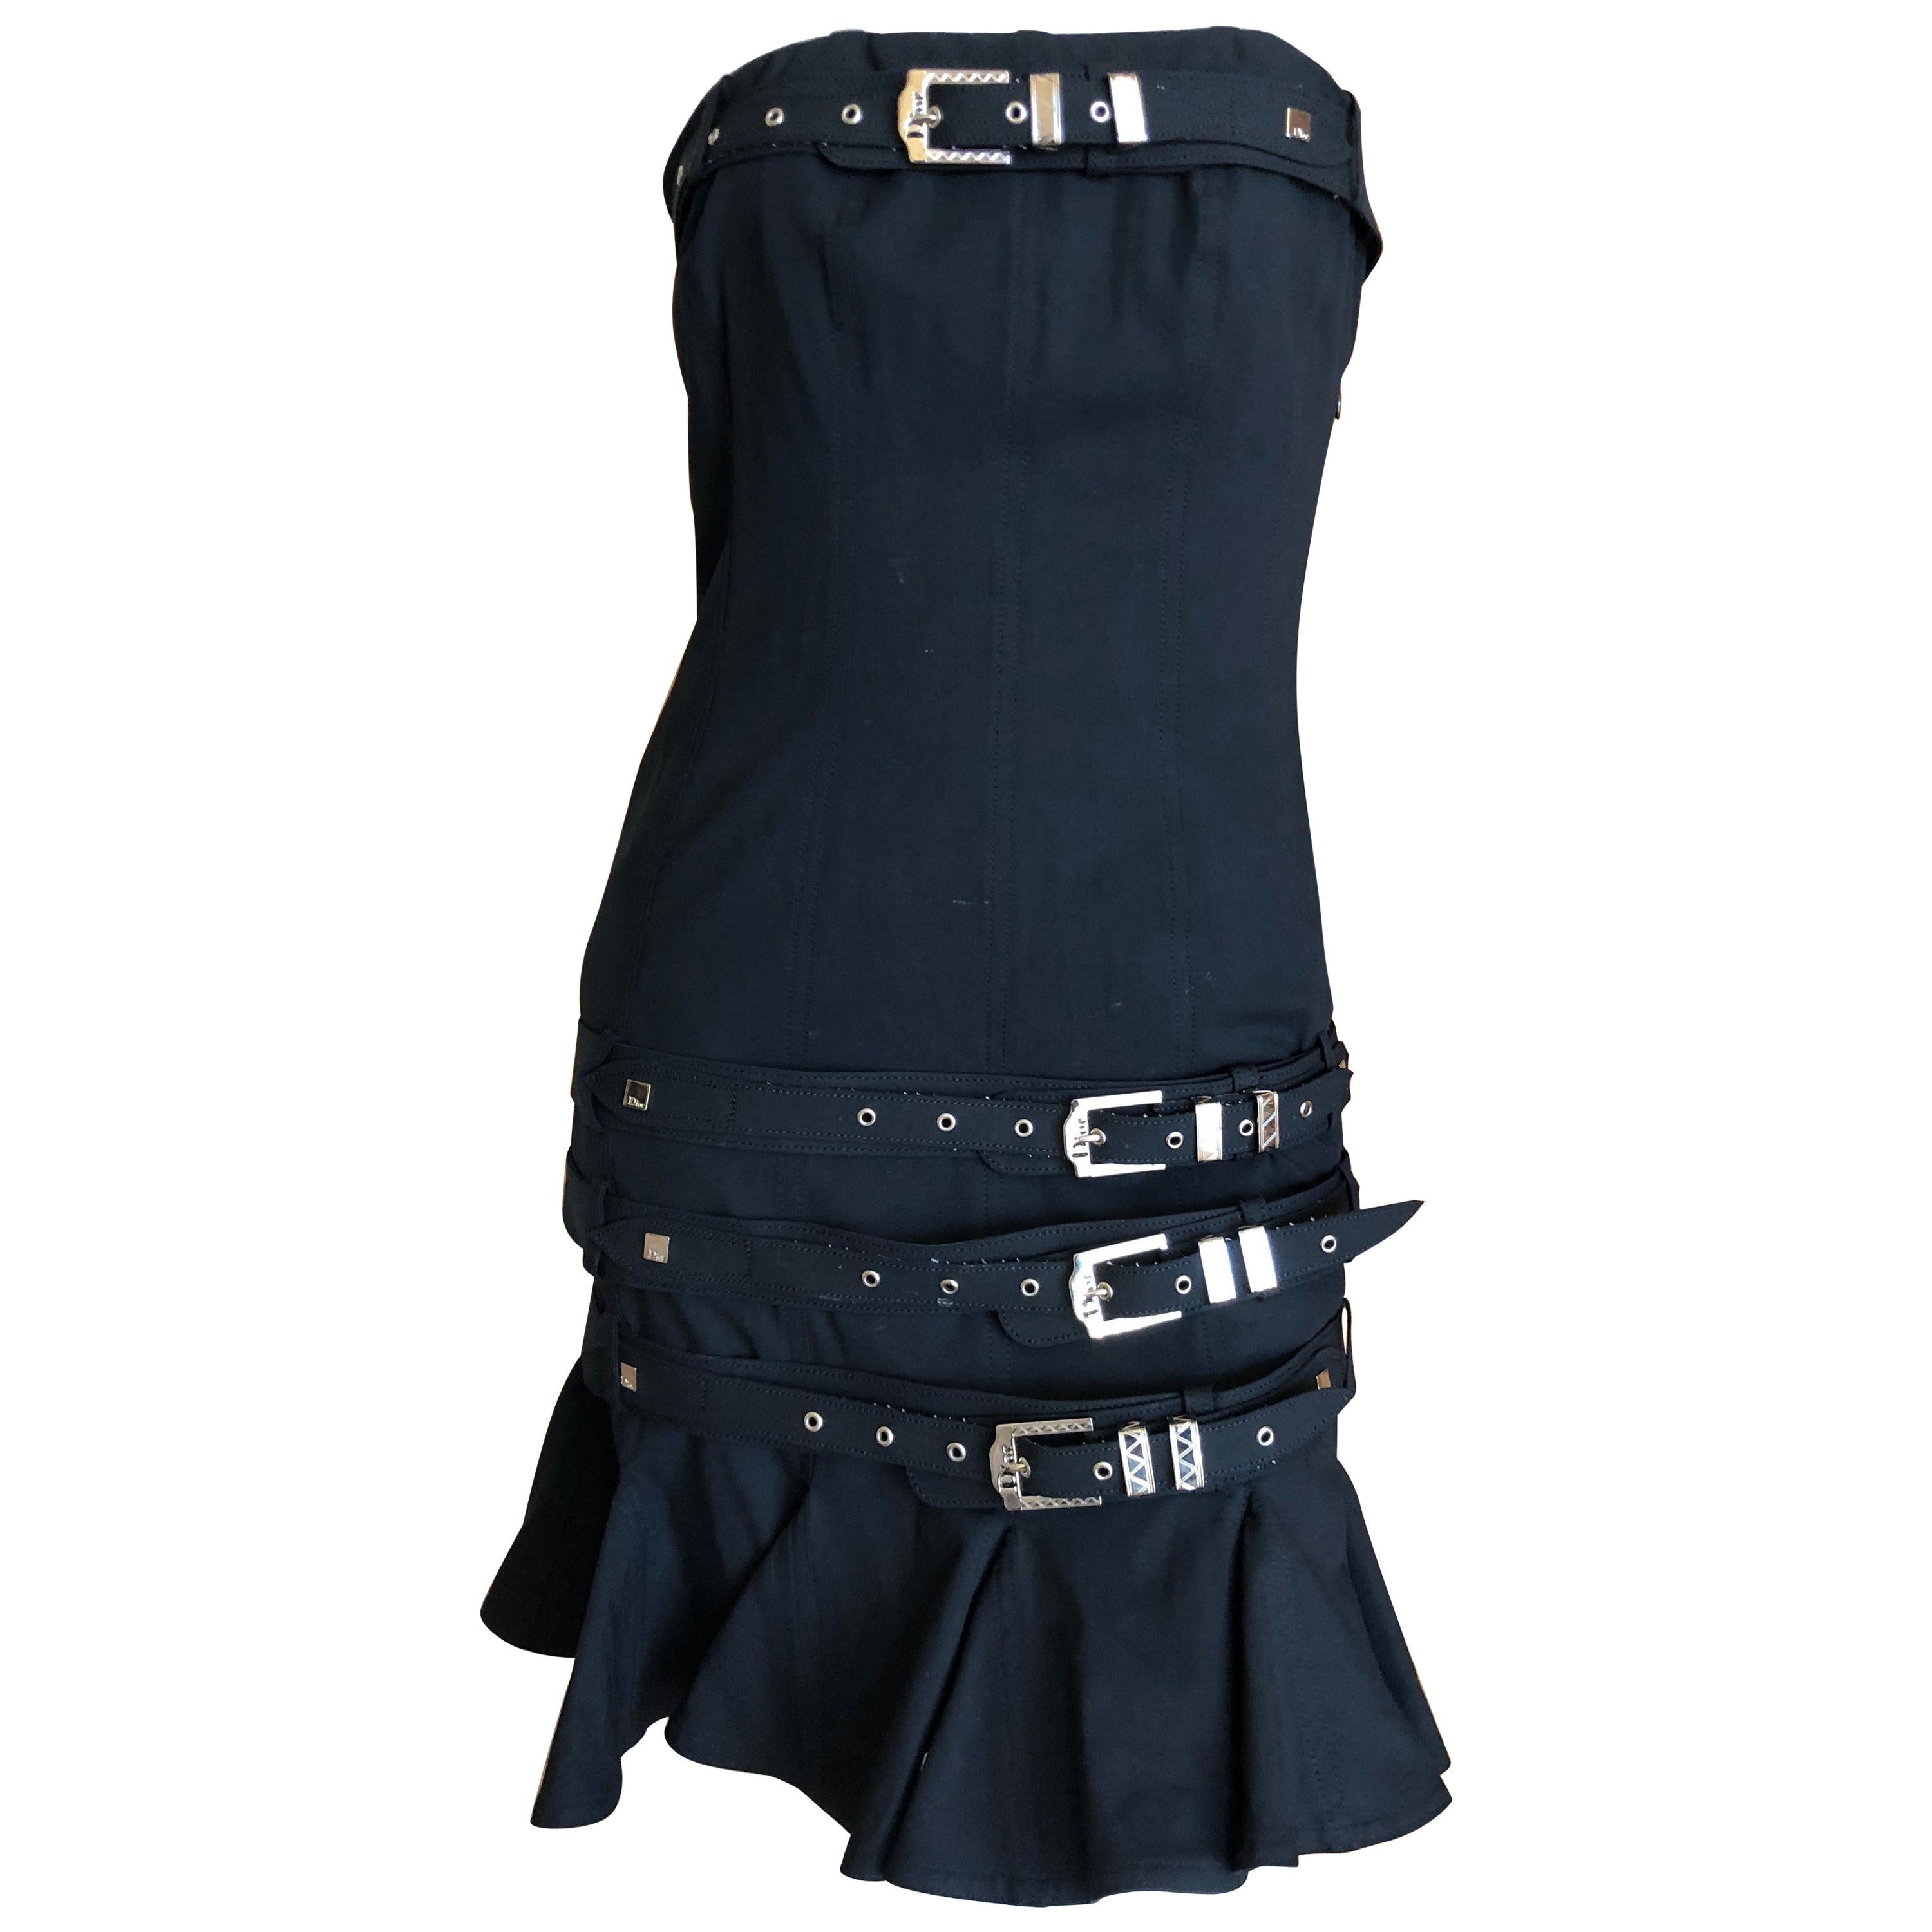  Christian Dior by John Galliano "Raj Rude Boy" Collection Black Buckle Dress For Sale